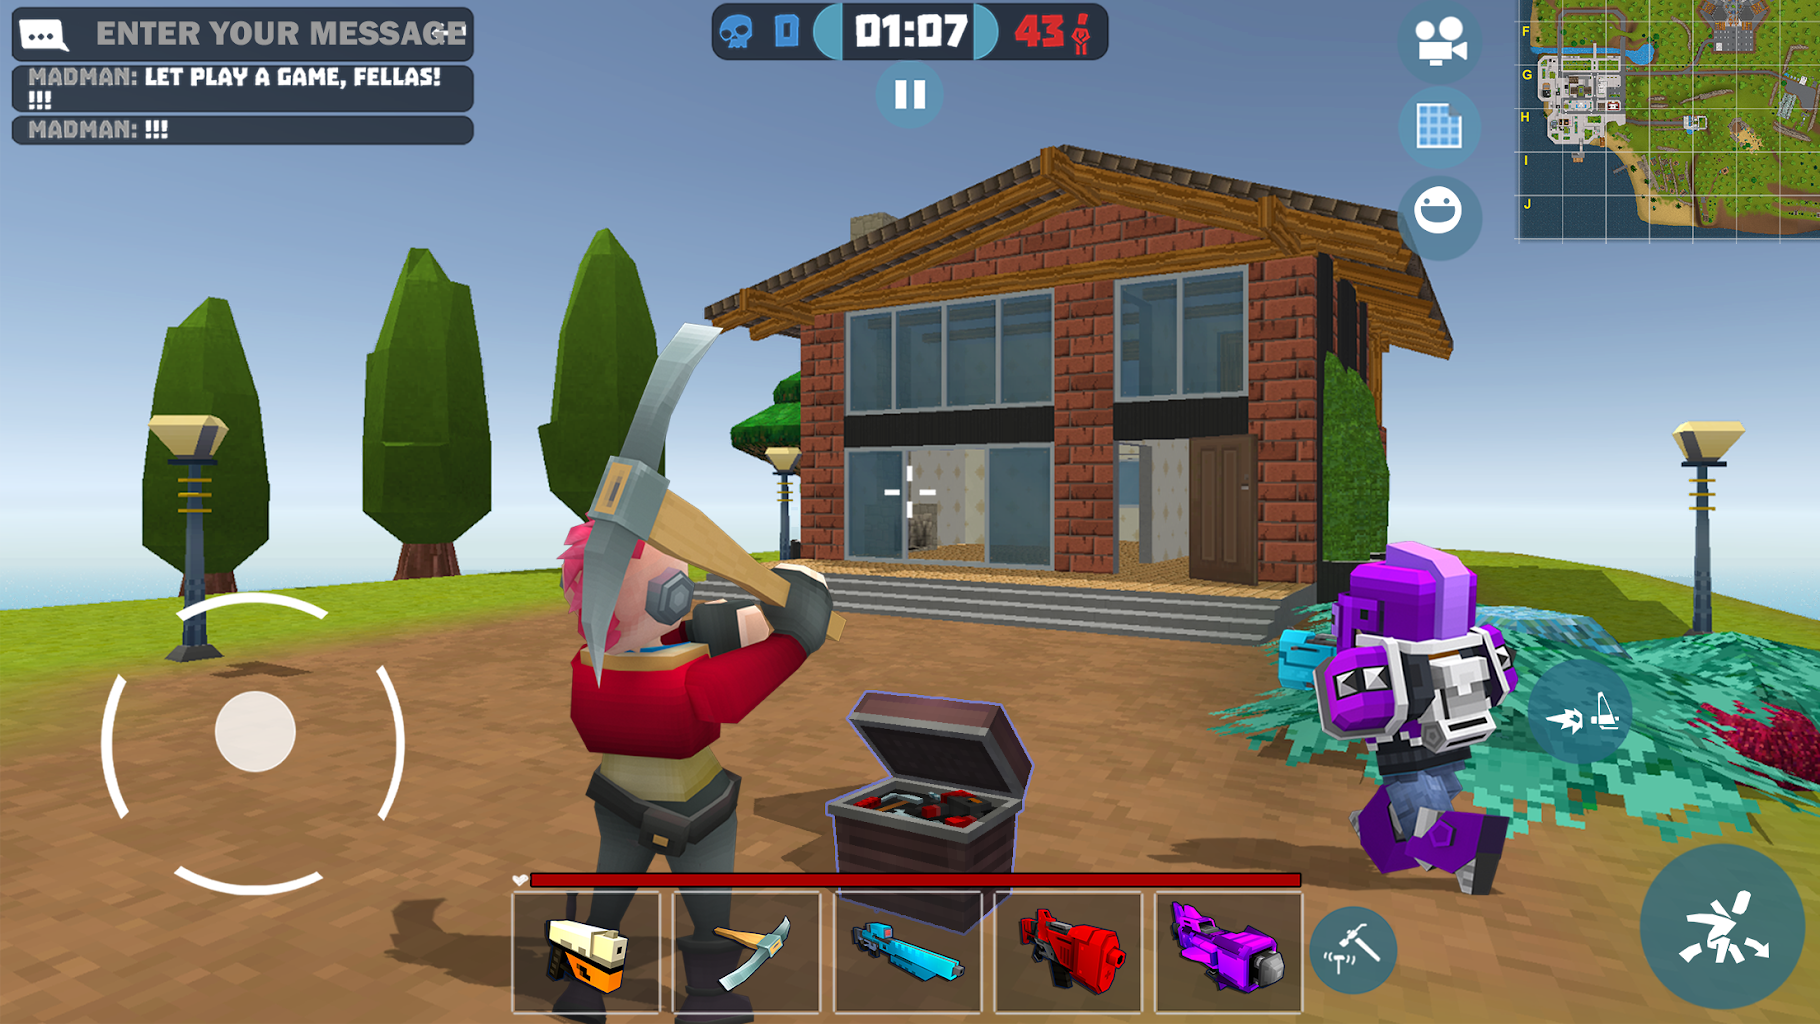 Mad GunS battle royale game Screenshot 7